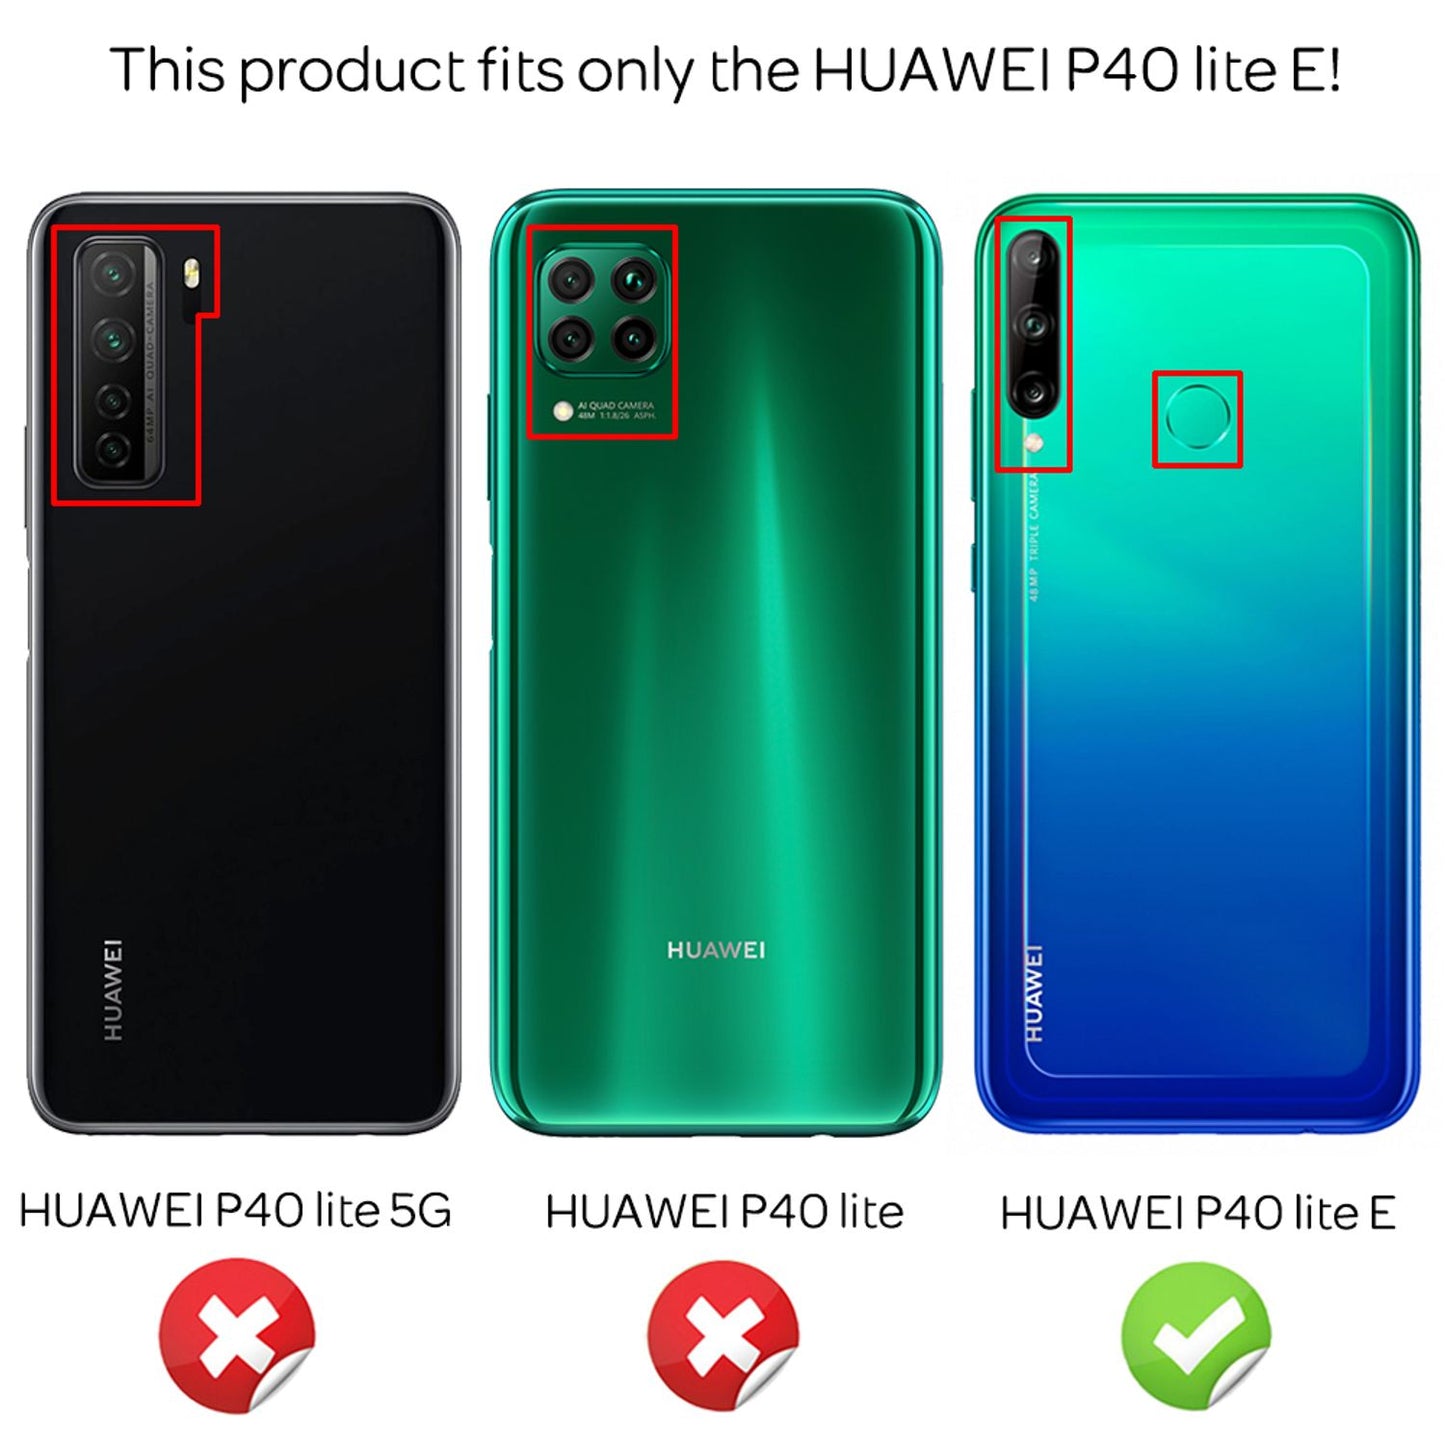 NALIA Handy Hülle für Huawei P40 lite E, Leder Look Silikon Cover Case Bumper